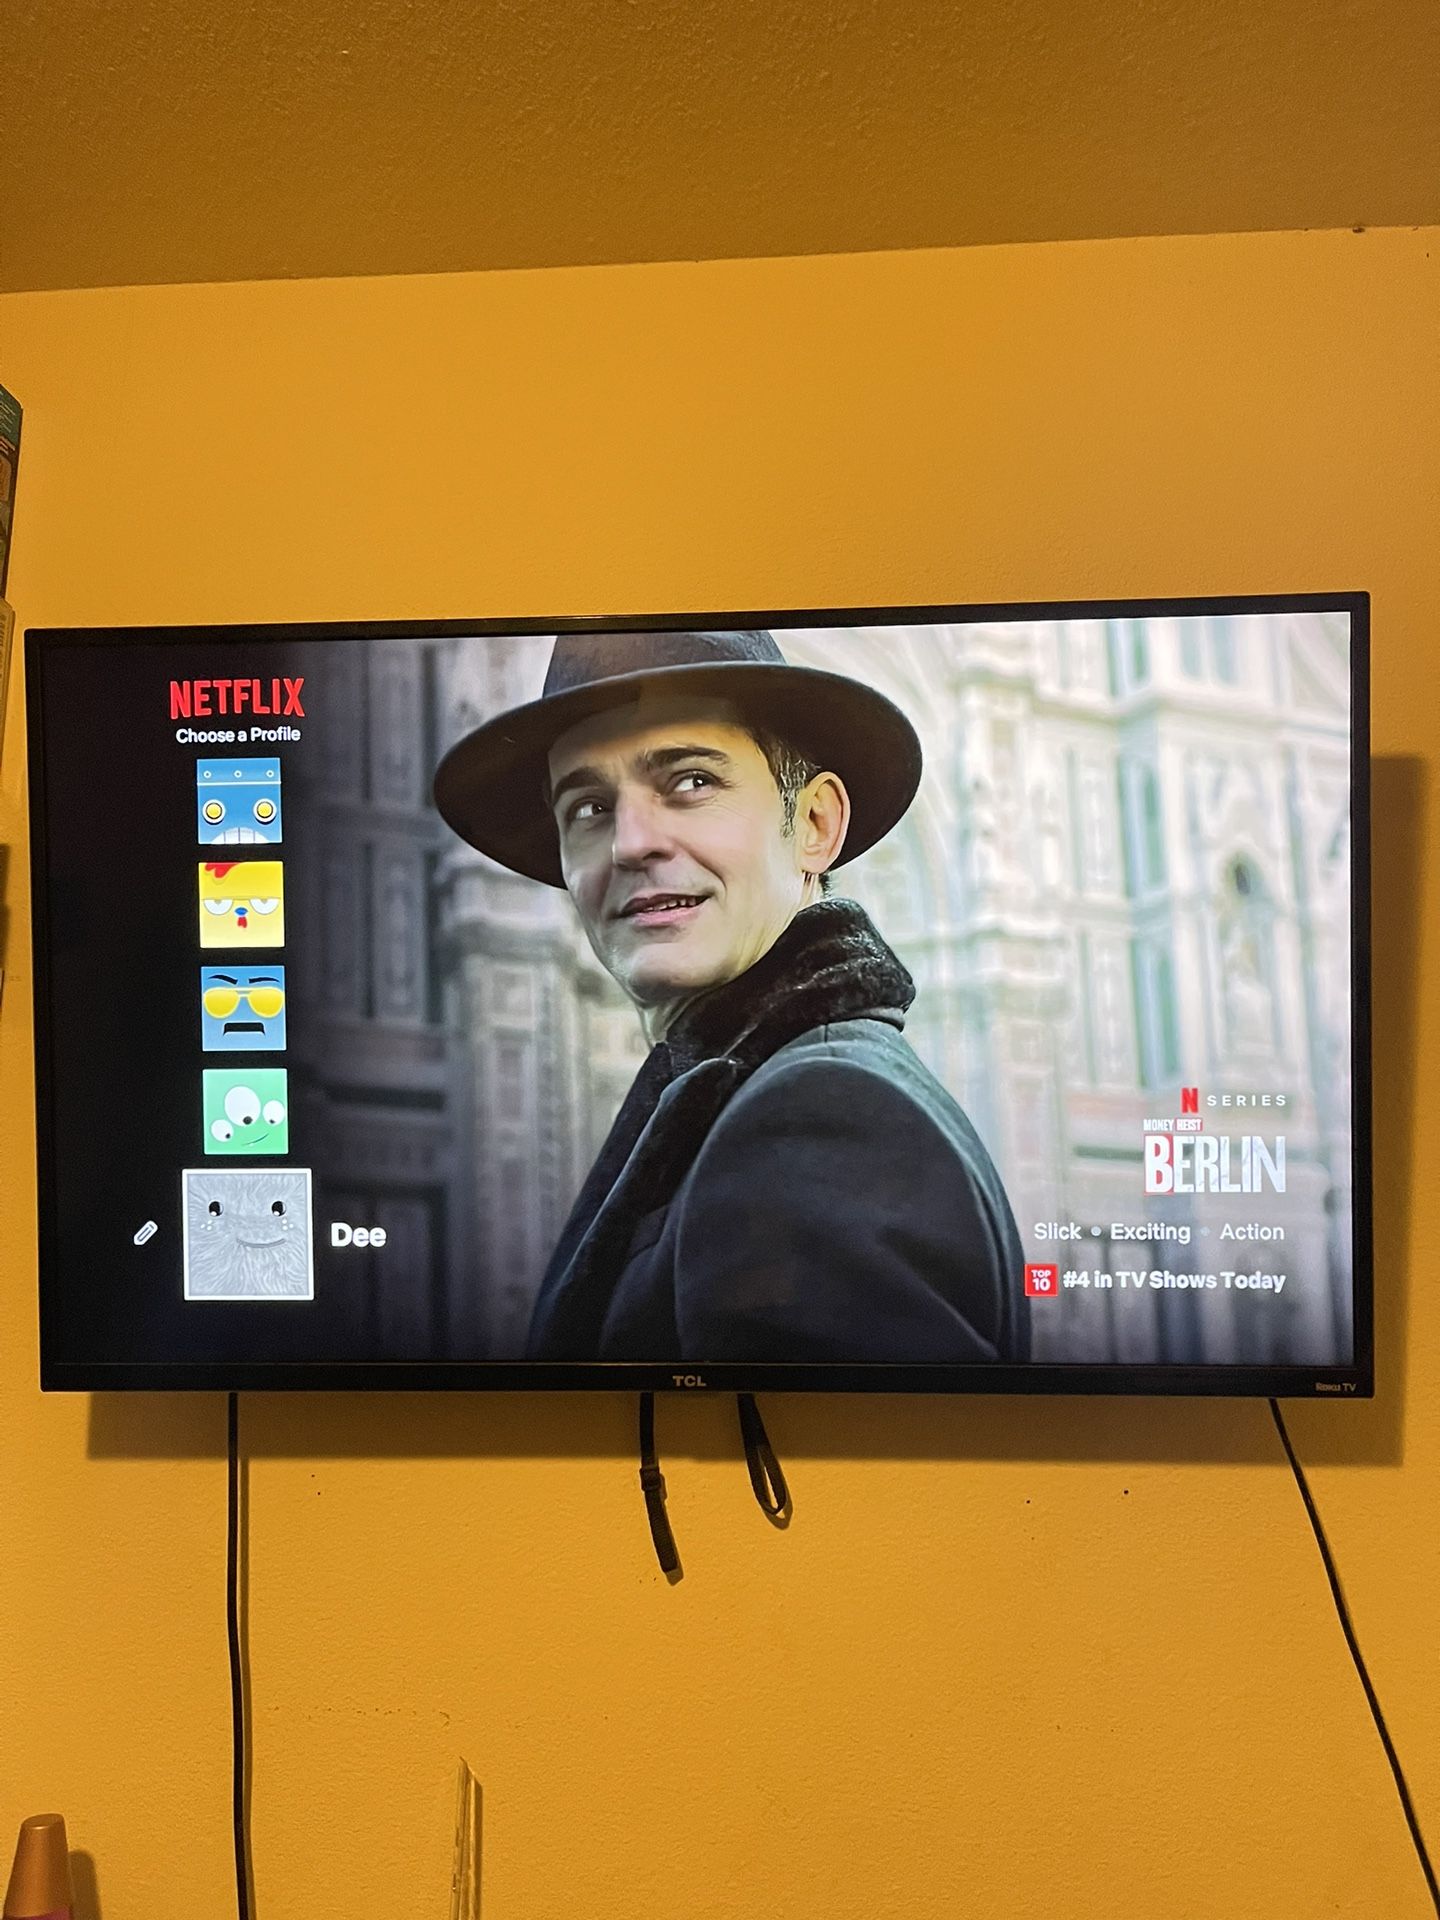 TV Roku Flatscreen 4K 43 Inches 